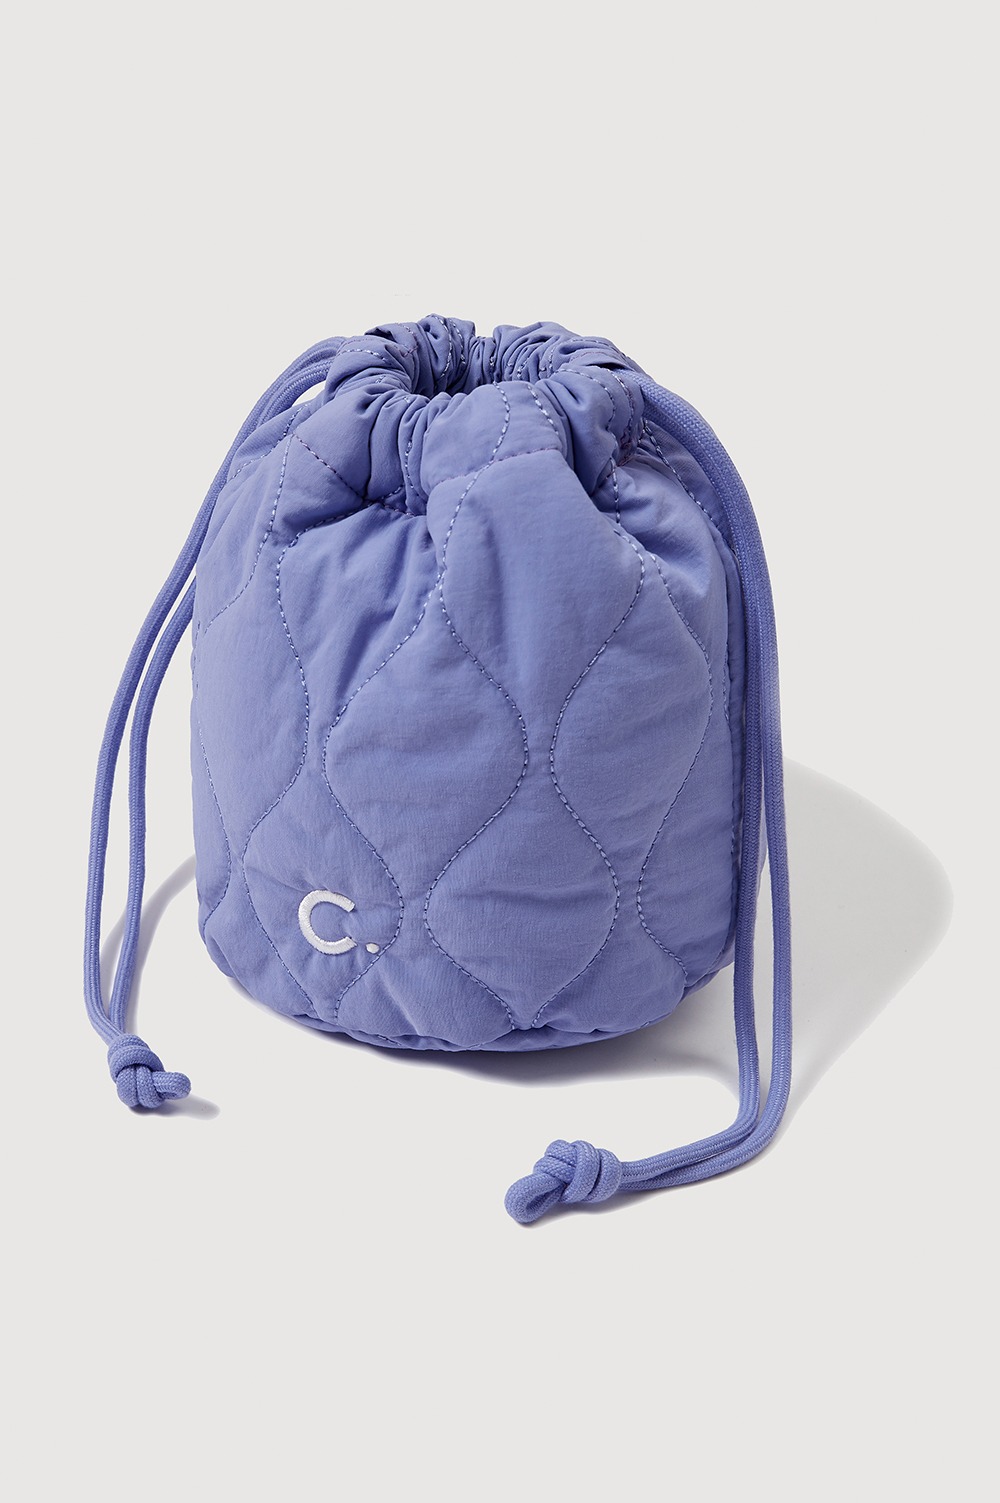 clove - [22FW clove] Quilting Bag (Lavender)